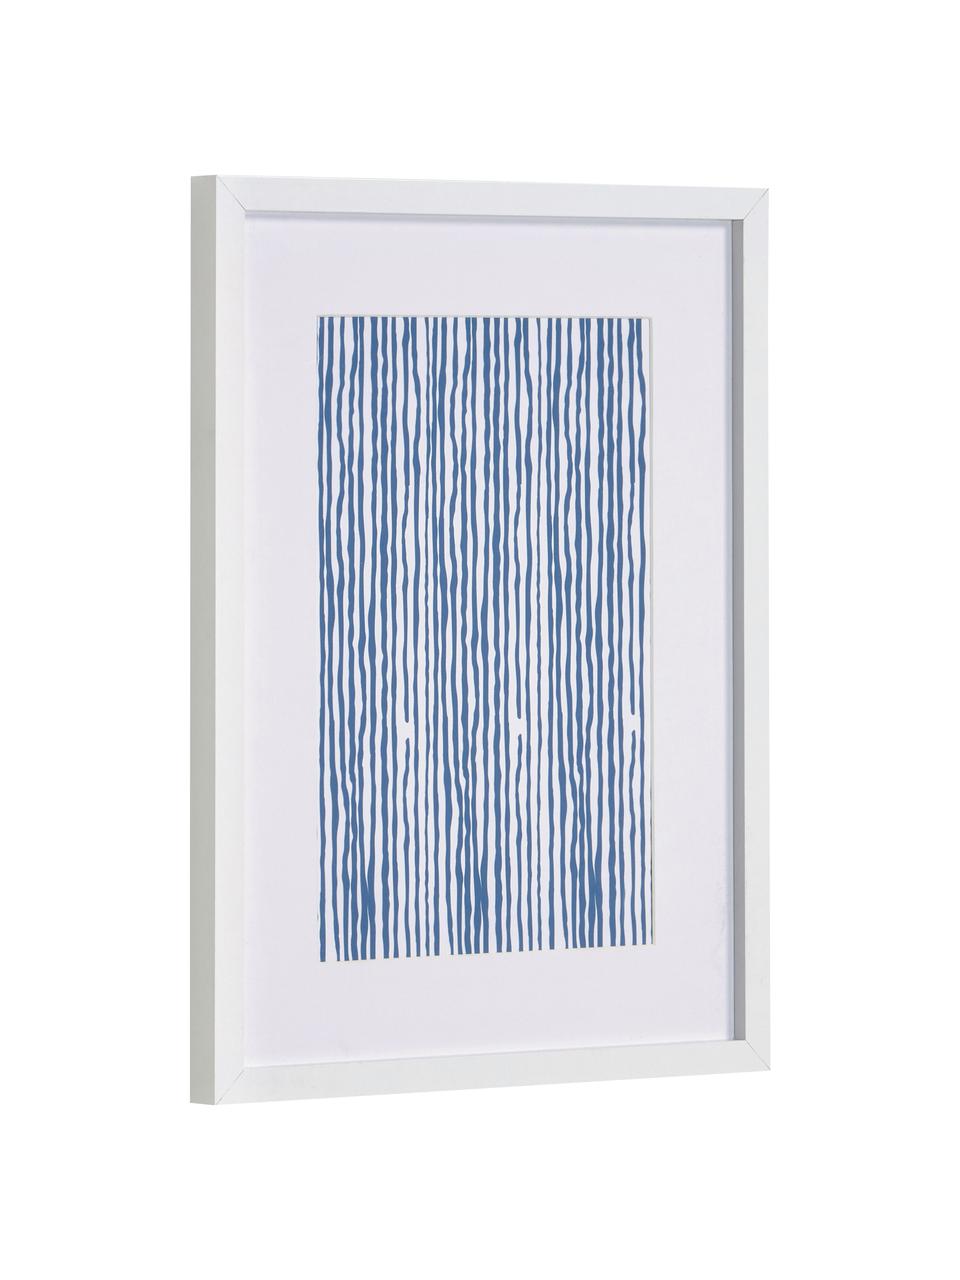 Zarámovaný digitální tisk Kuma Stripes, Bílá, krémově bílá, modrá, Š 30 cm, V 40 cm